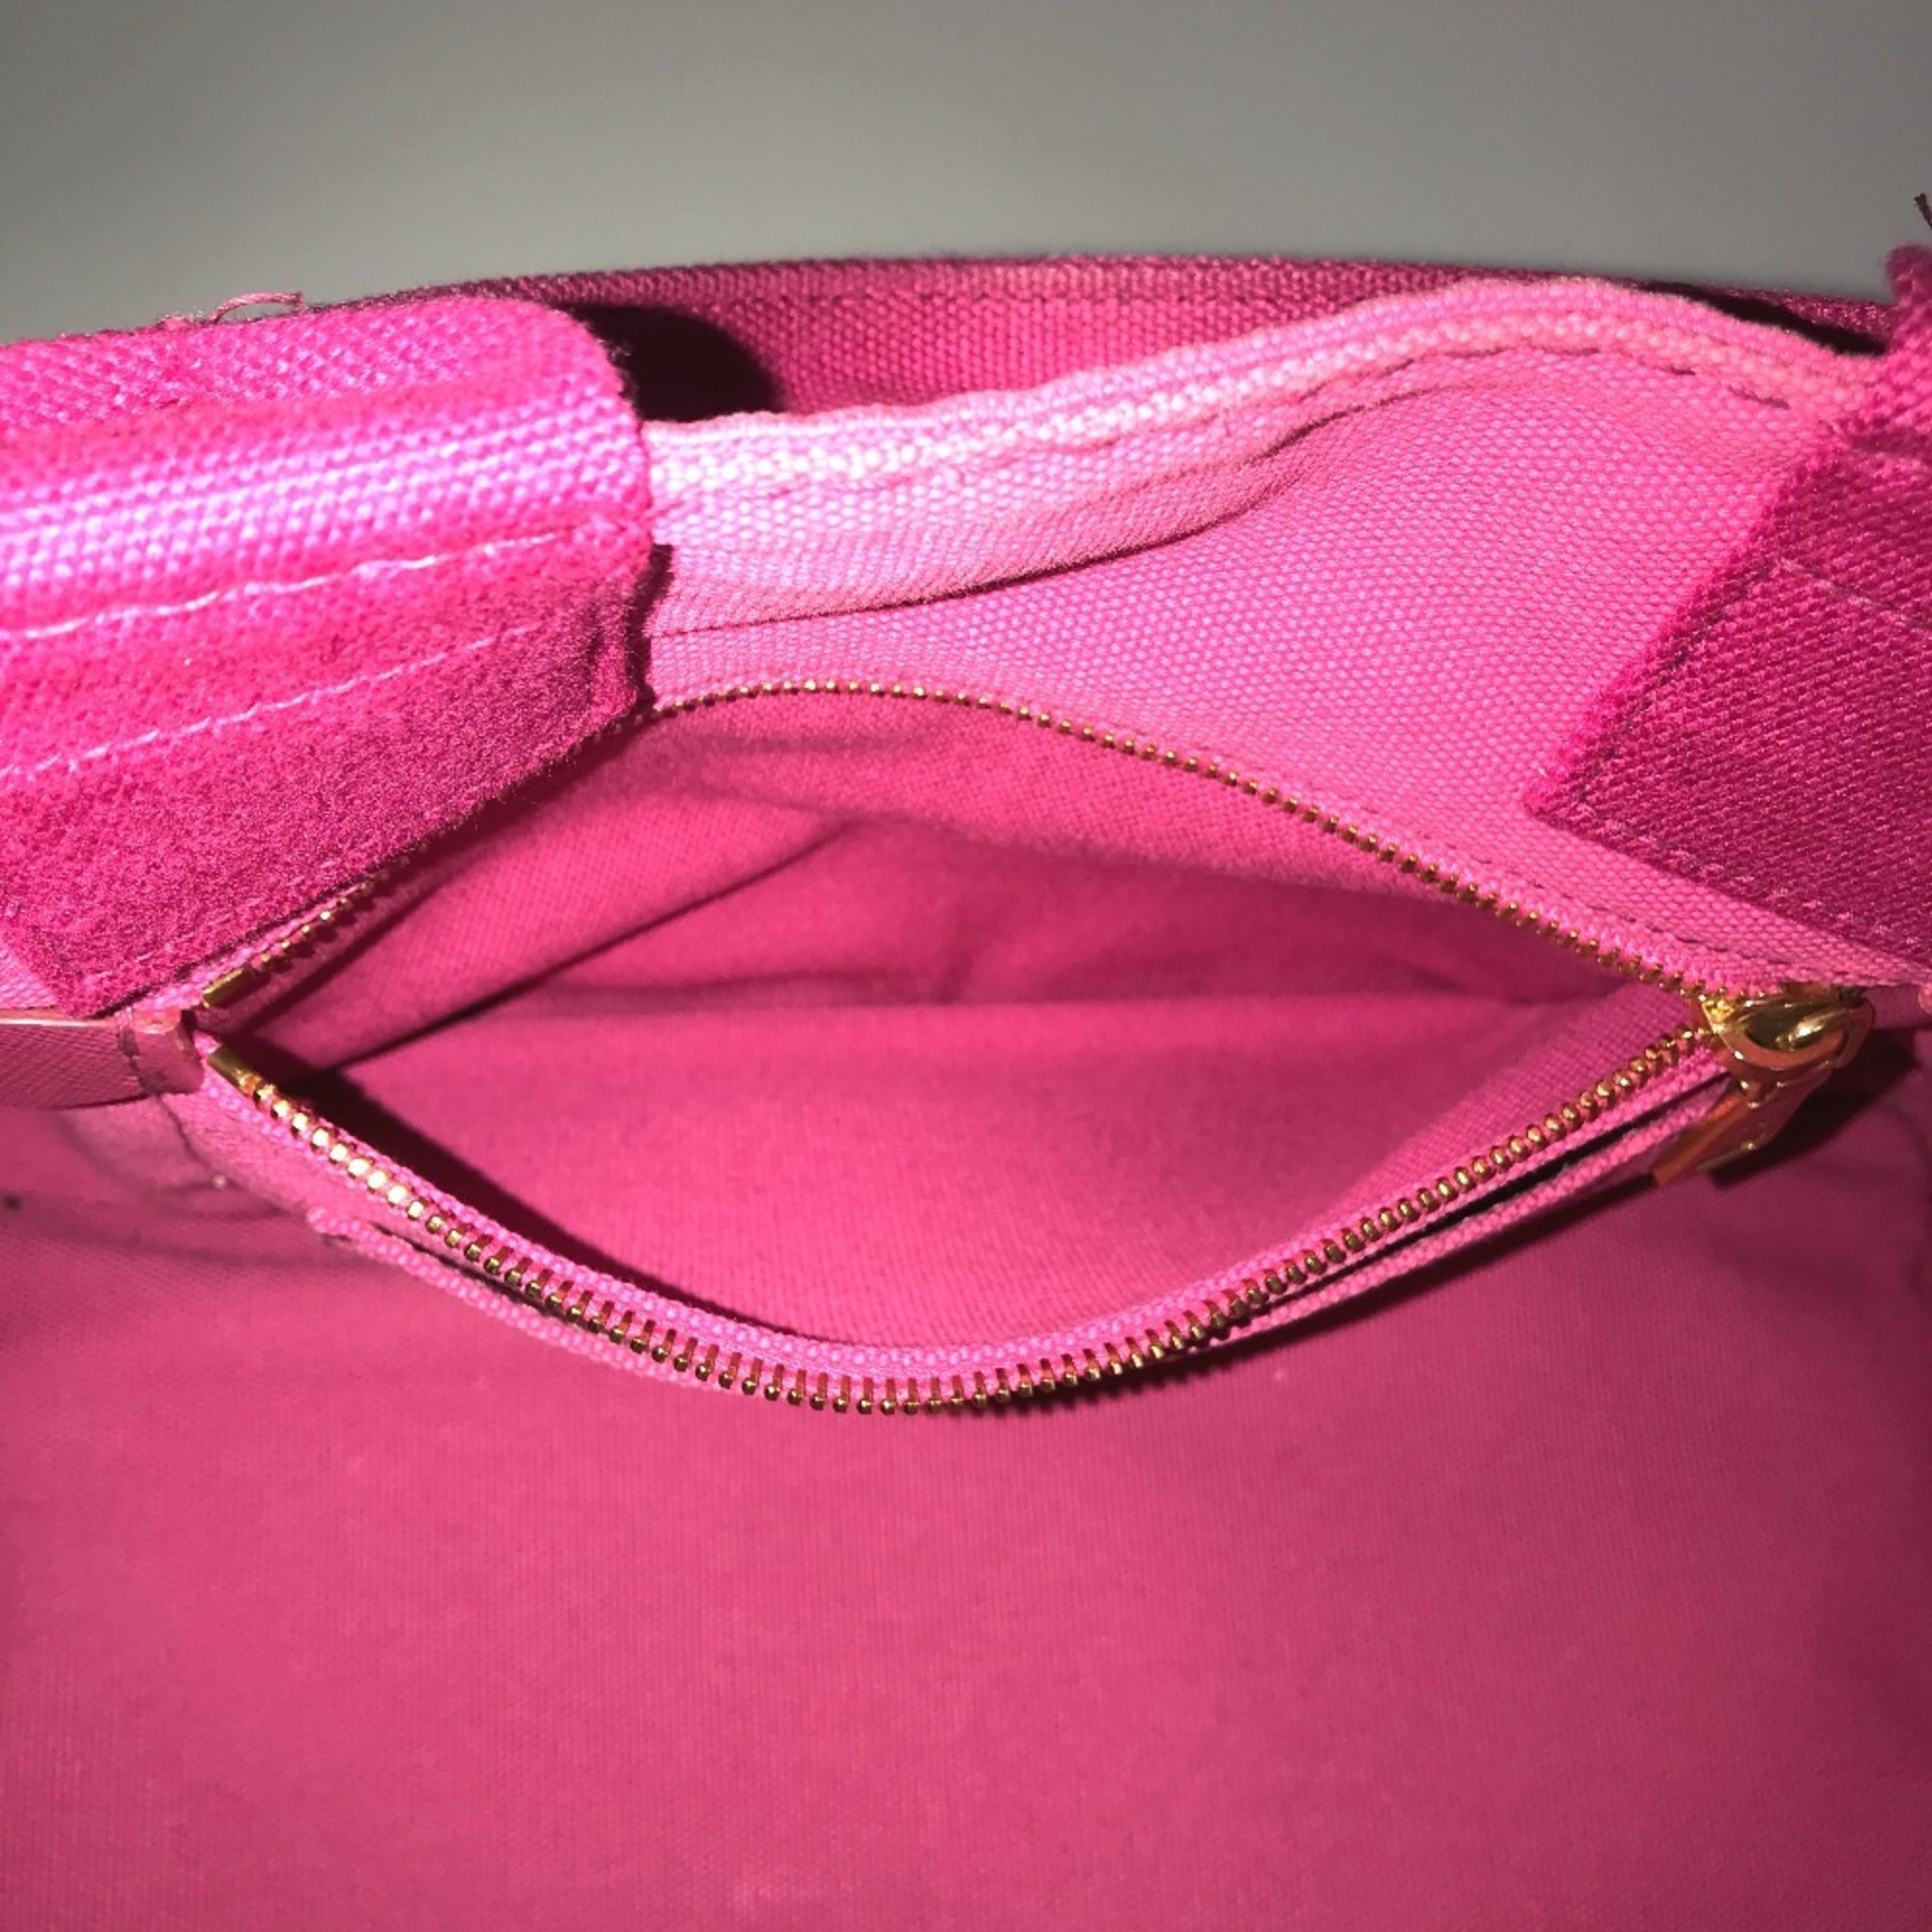 PRADA Prada Canapa Handbag Tote Bag Women's Canvas Pink B1877G